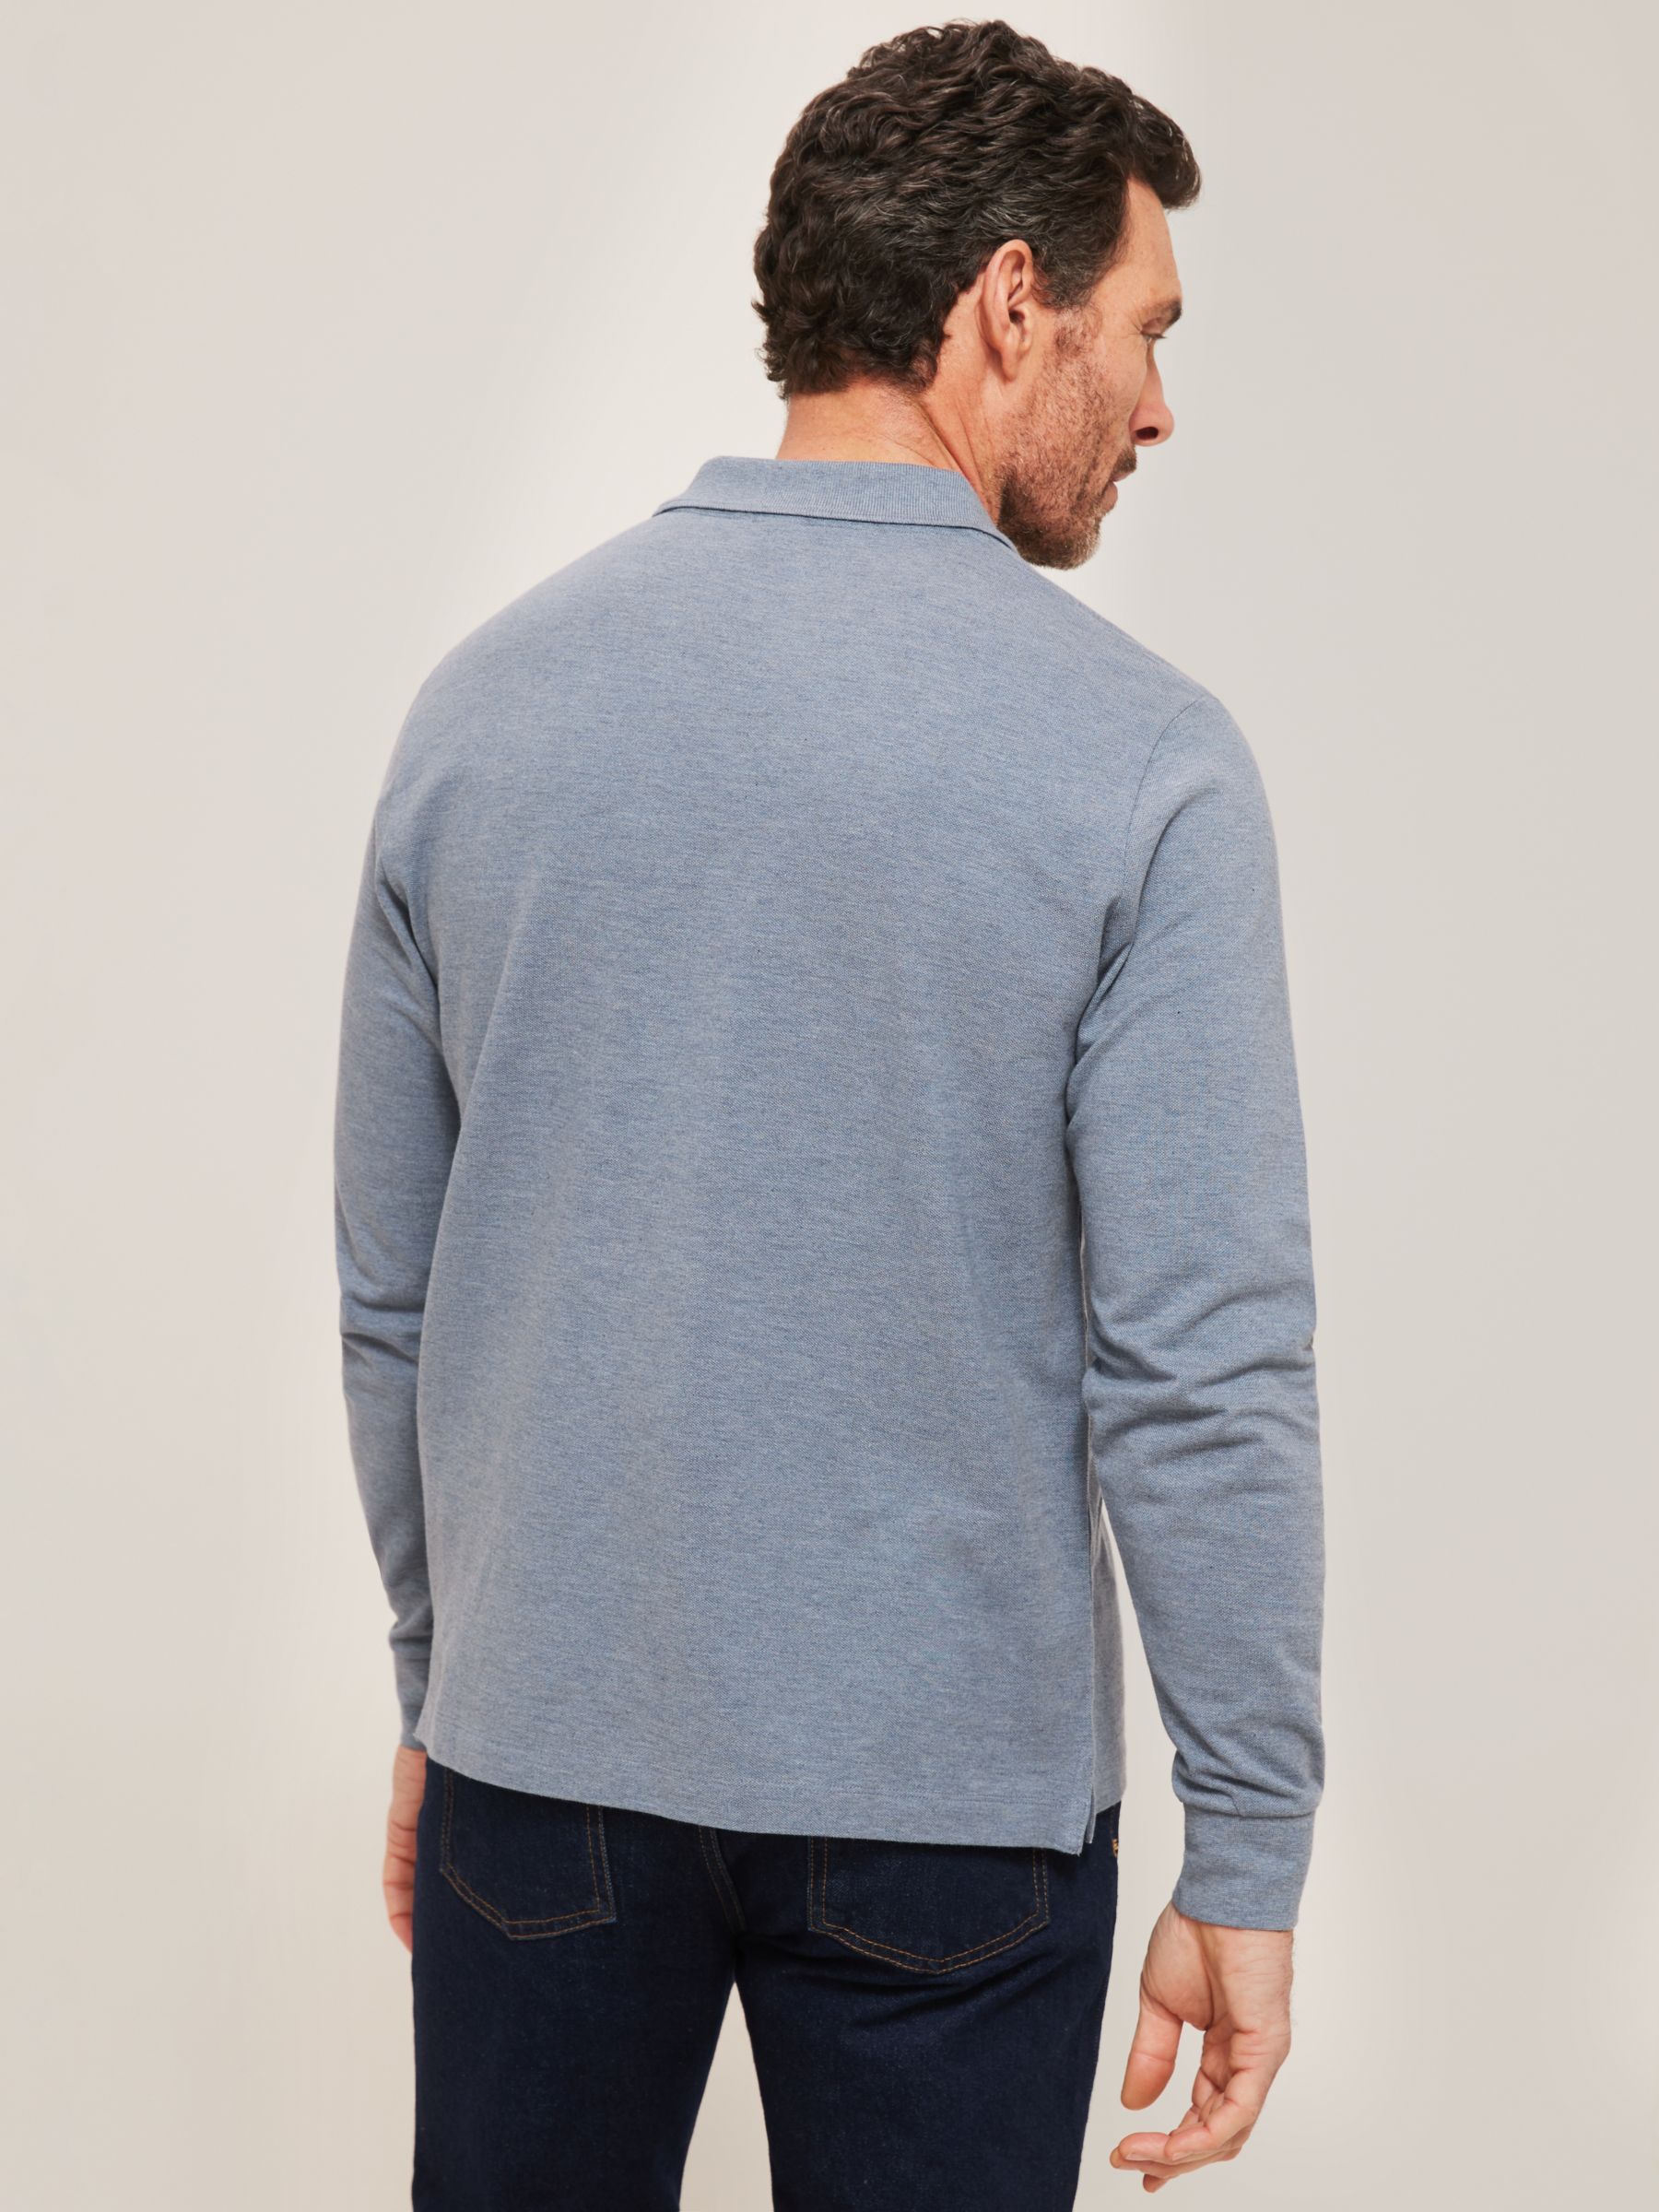 John Lewis Supima Cotton Long Sleeve Jersey Polo Shirt, Denim Melange, XL